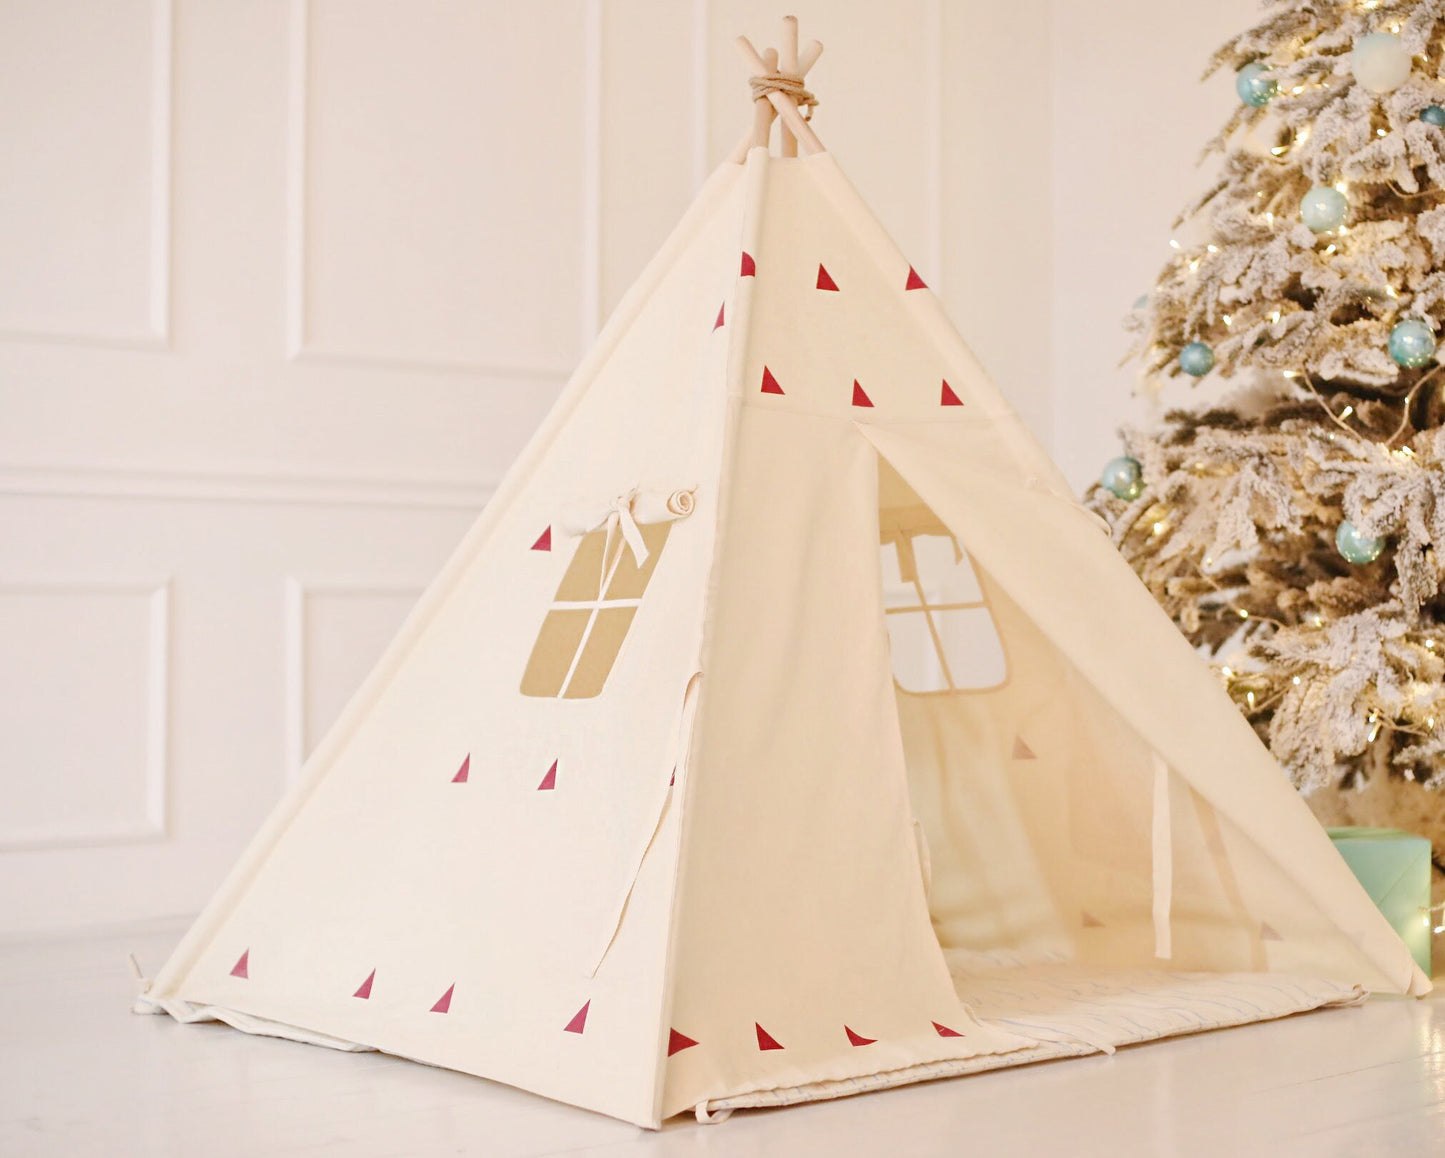 DEEP ROSE small triangles Tipi, Tipi tent, tipi, kids tipi, tipi kids, tent, play tent, play house, kids teepee, canvas tipi Christmas gift